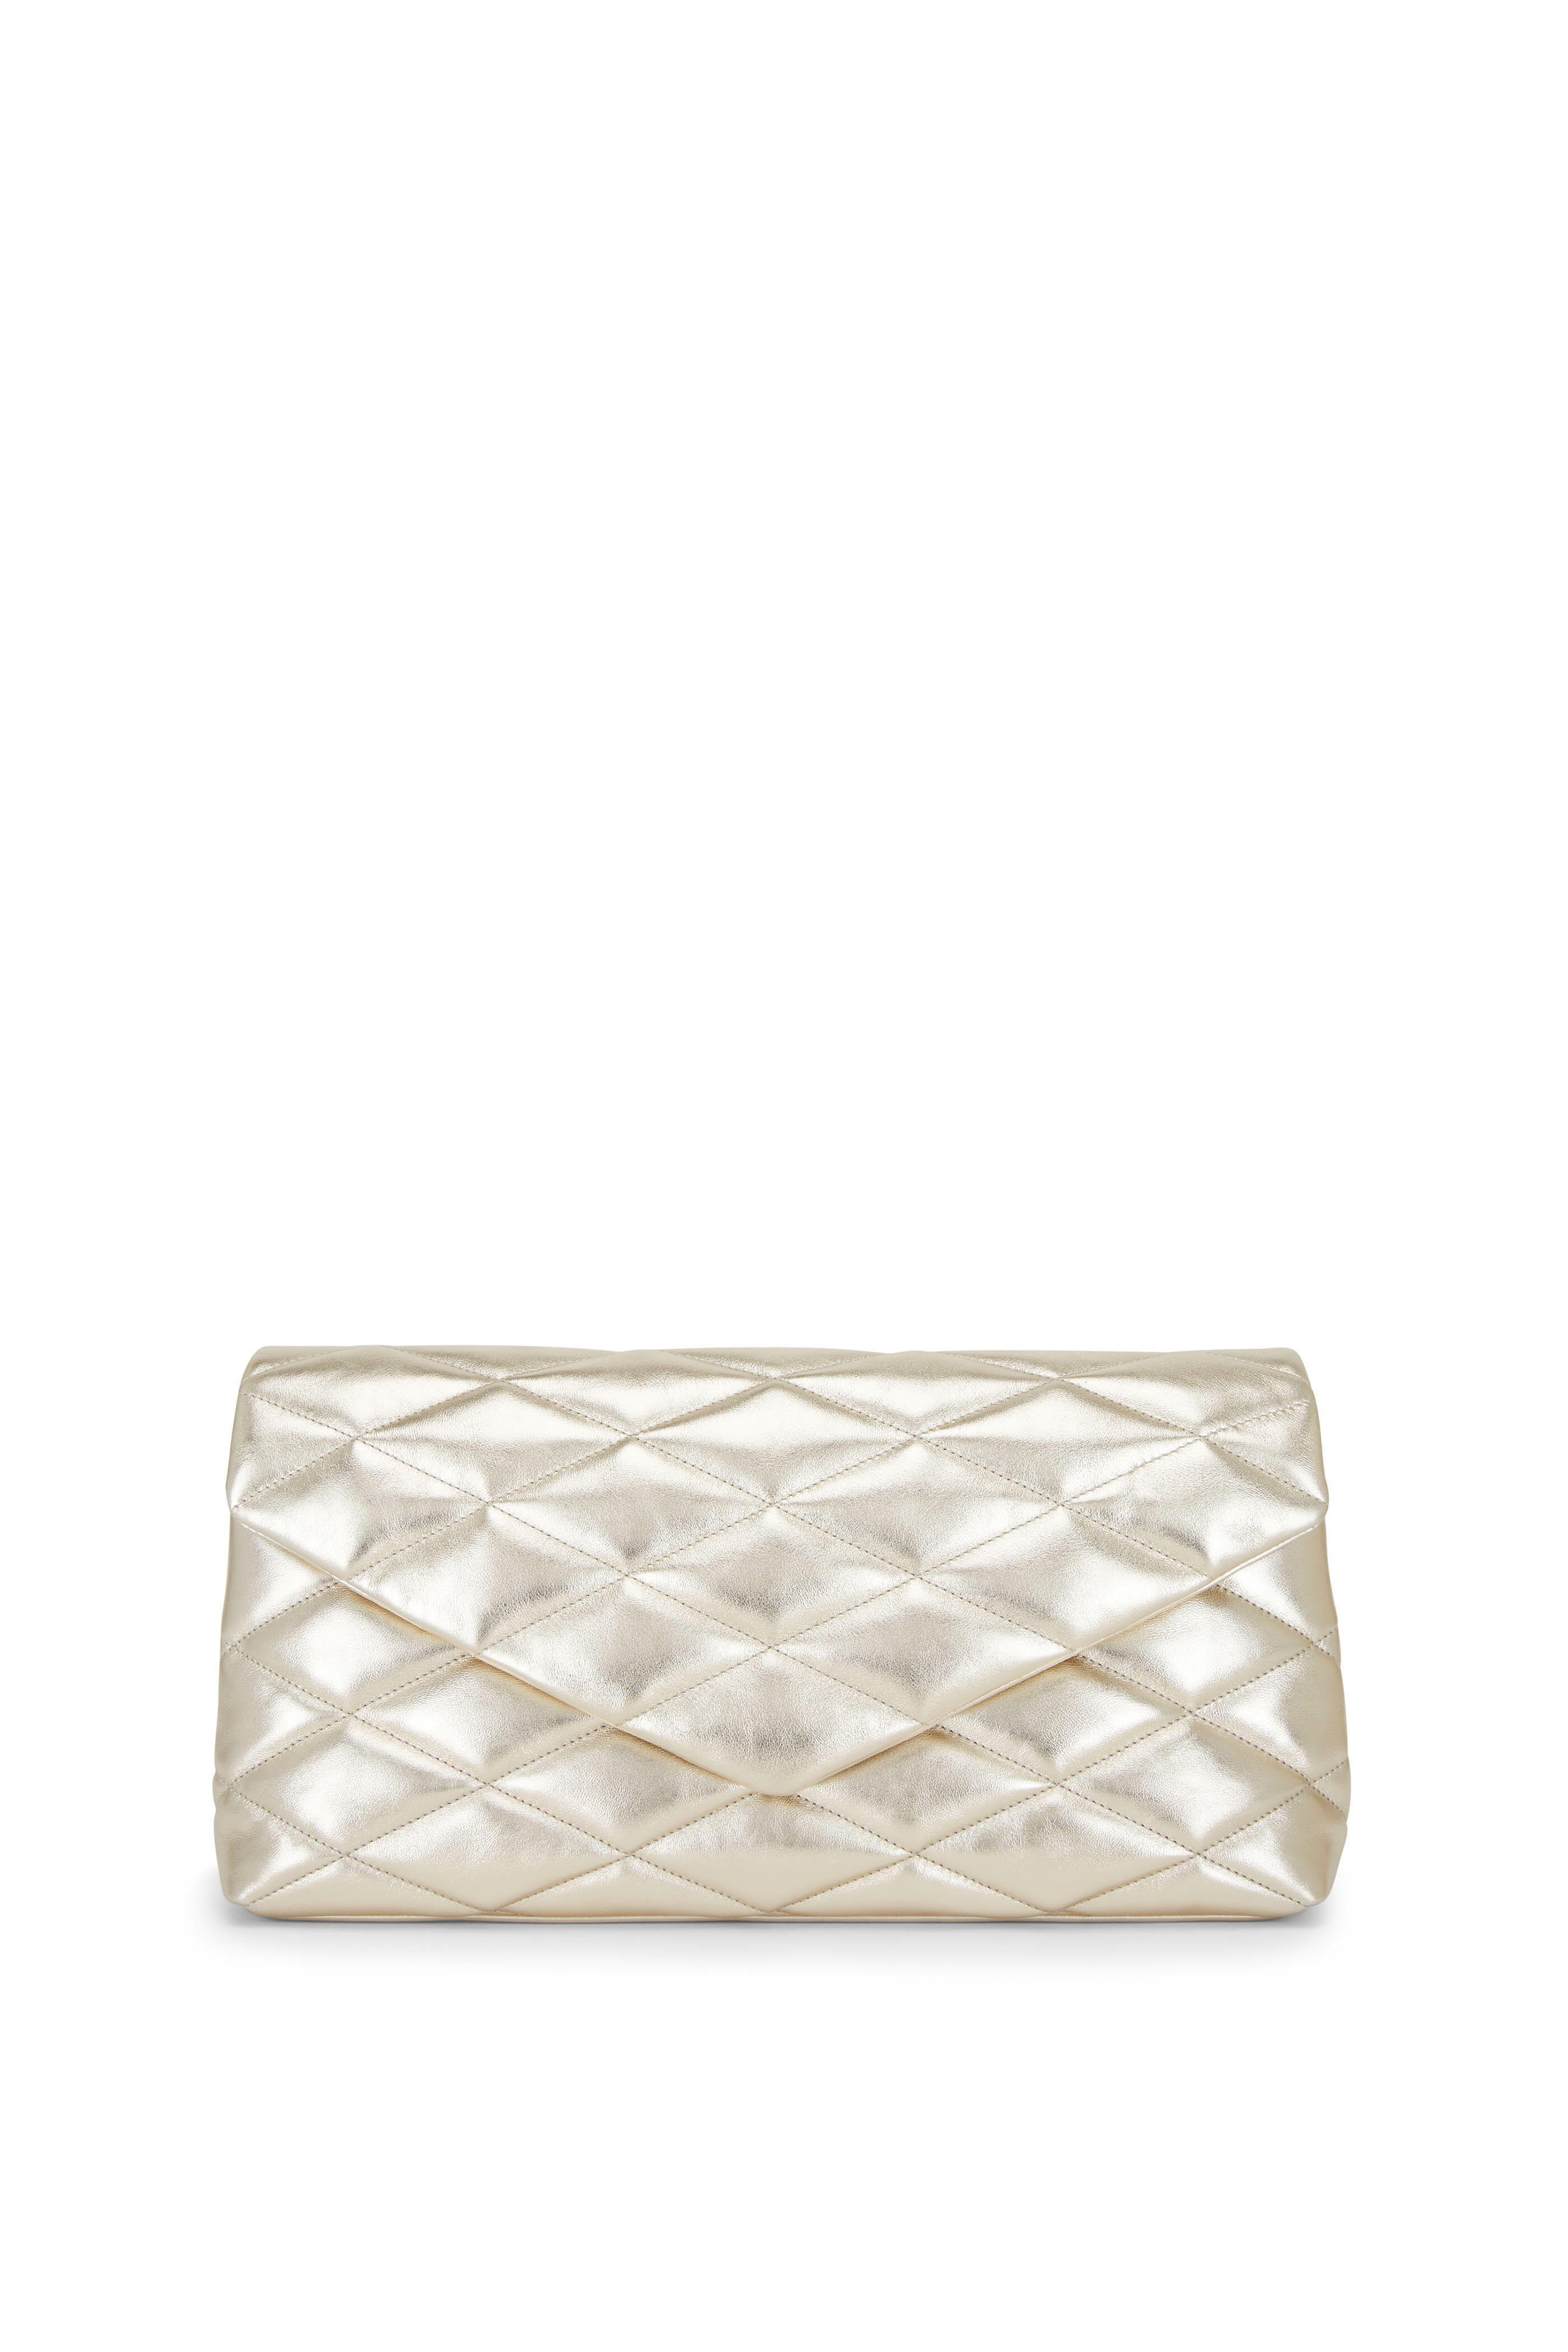 Saint Laurent Sade Puffer Envelope Clutch Bag - White - One Size